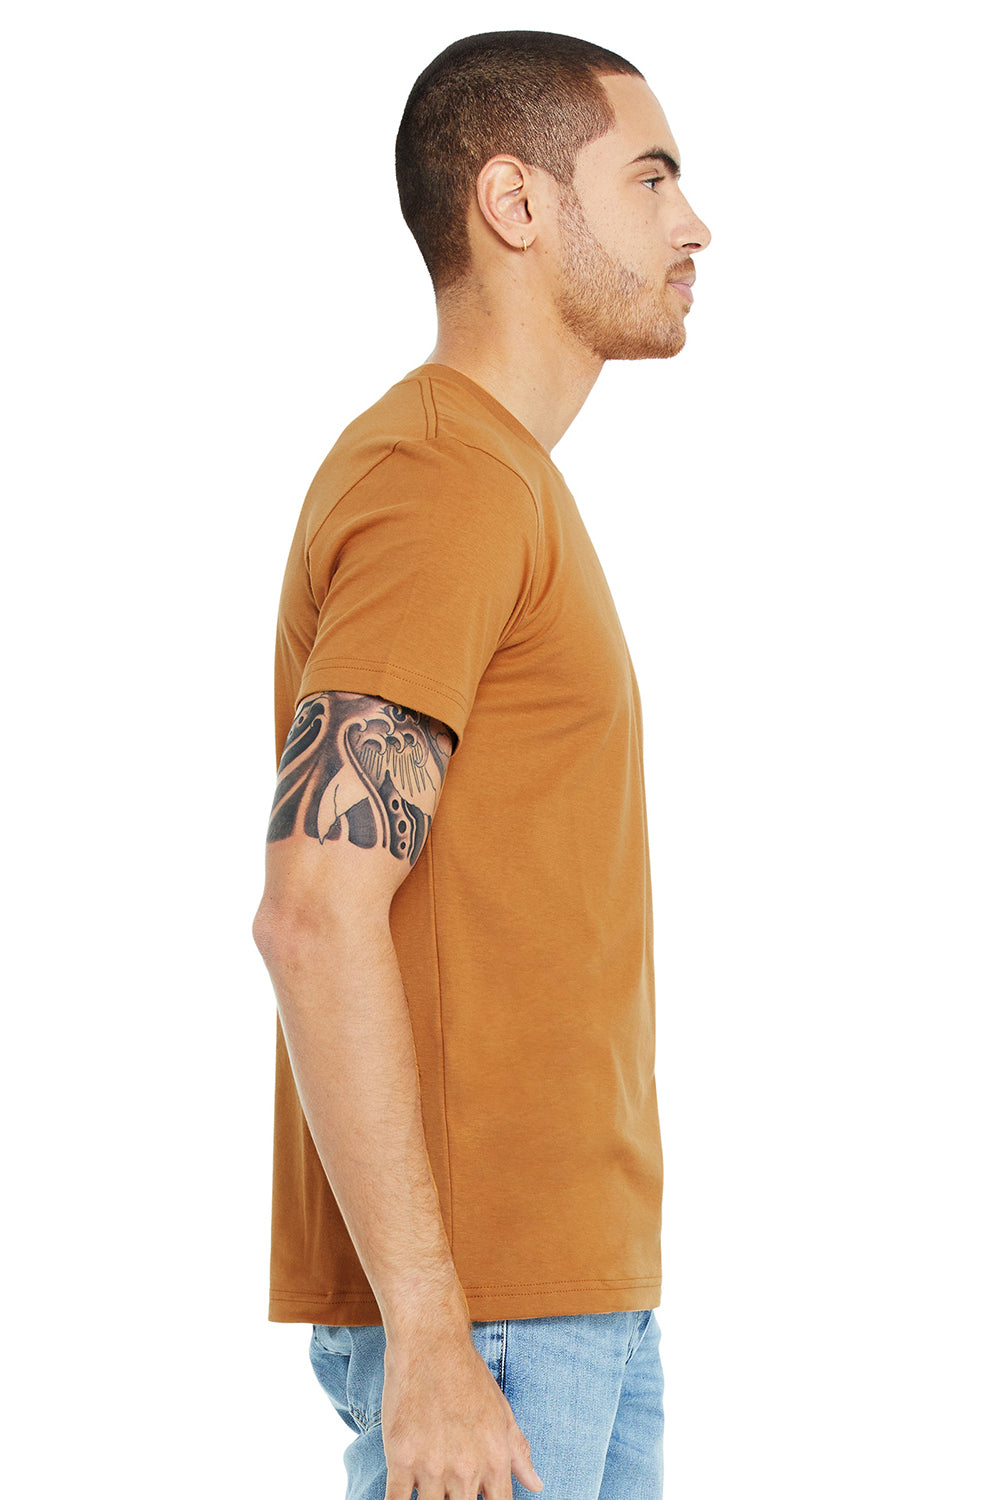 Bella + Canvas BC3001/3001C Mens Jersey Short Sleeve Crewneck T-Shirt Toast Model Side